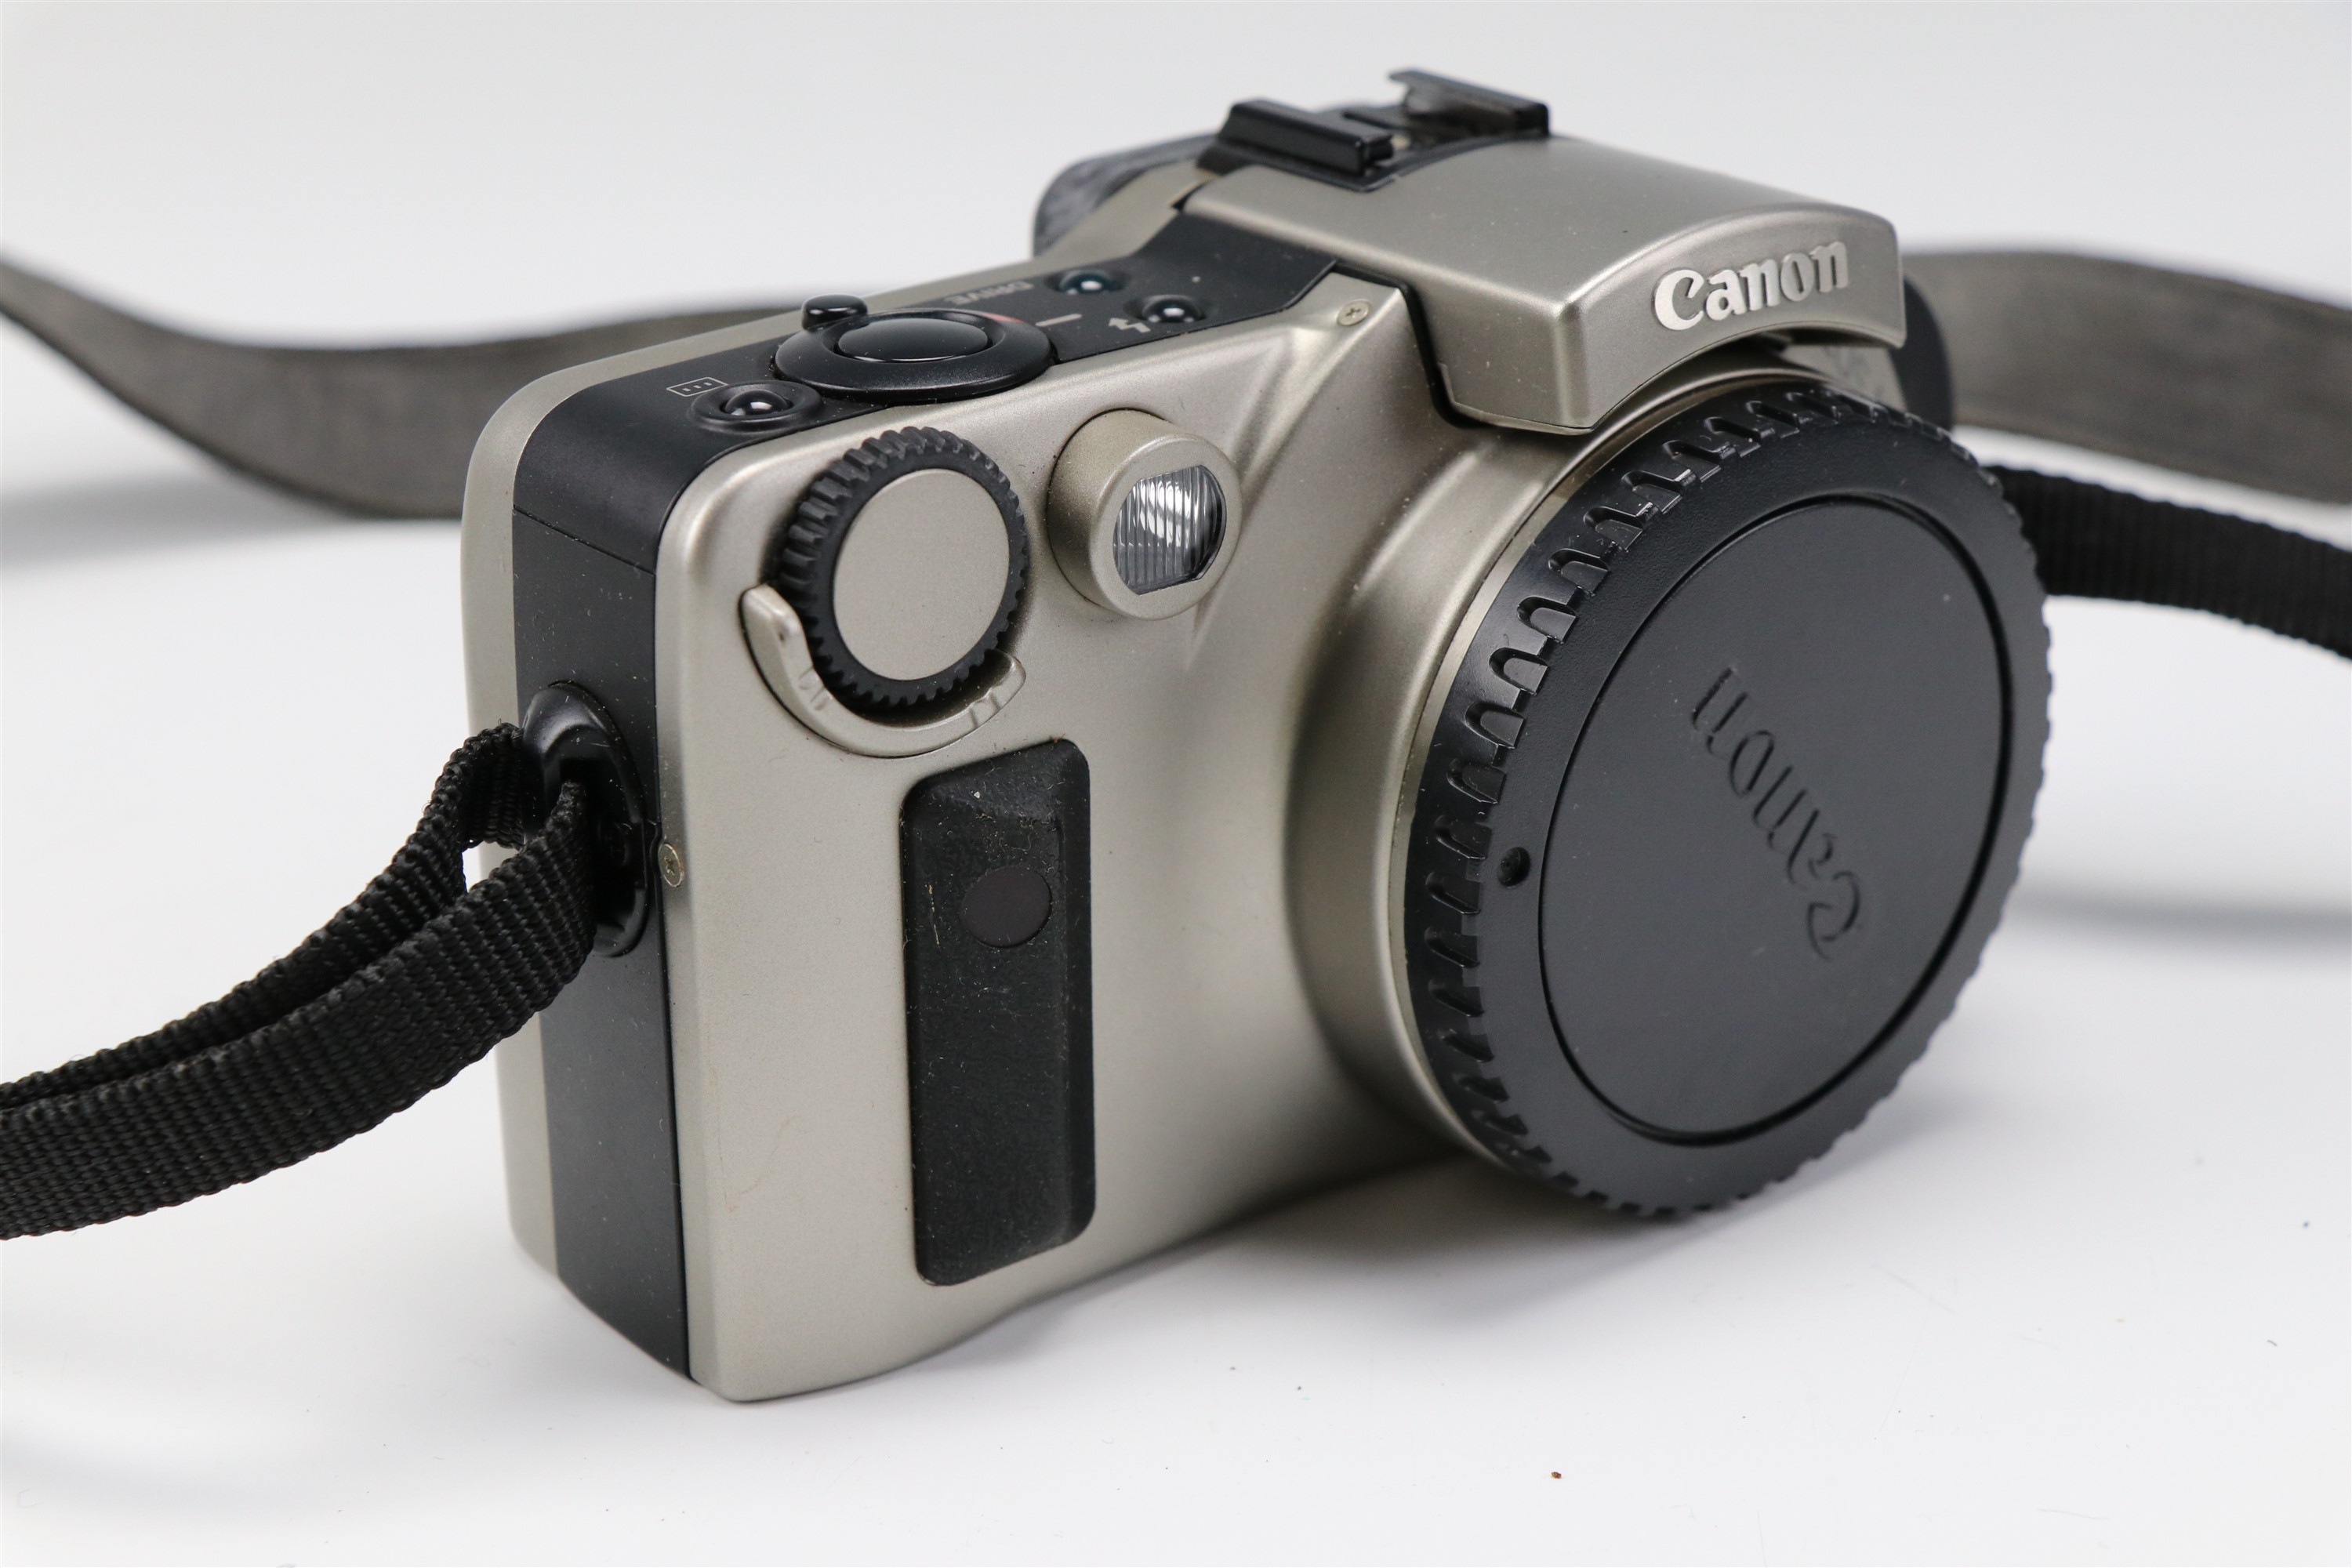 Lumix F238 HD, Canon EOS IX, Canon Digital IXUS 430, Konica Minolta Dimage 25 and Konica C35 EFP - Image 3 of 24